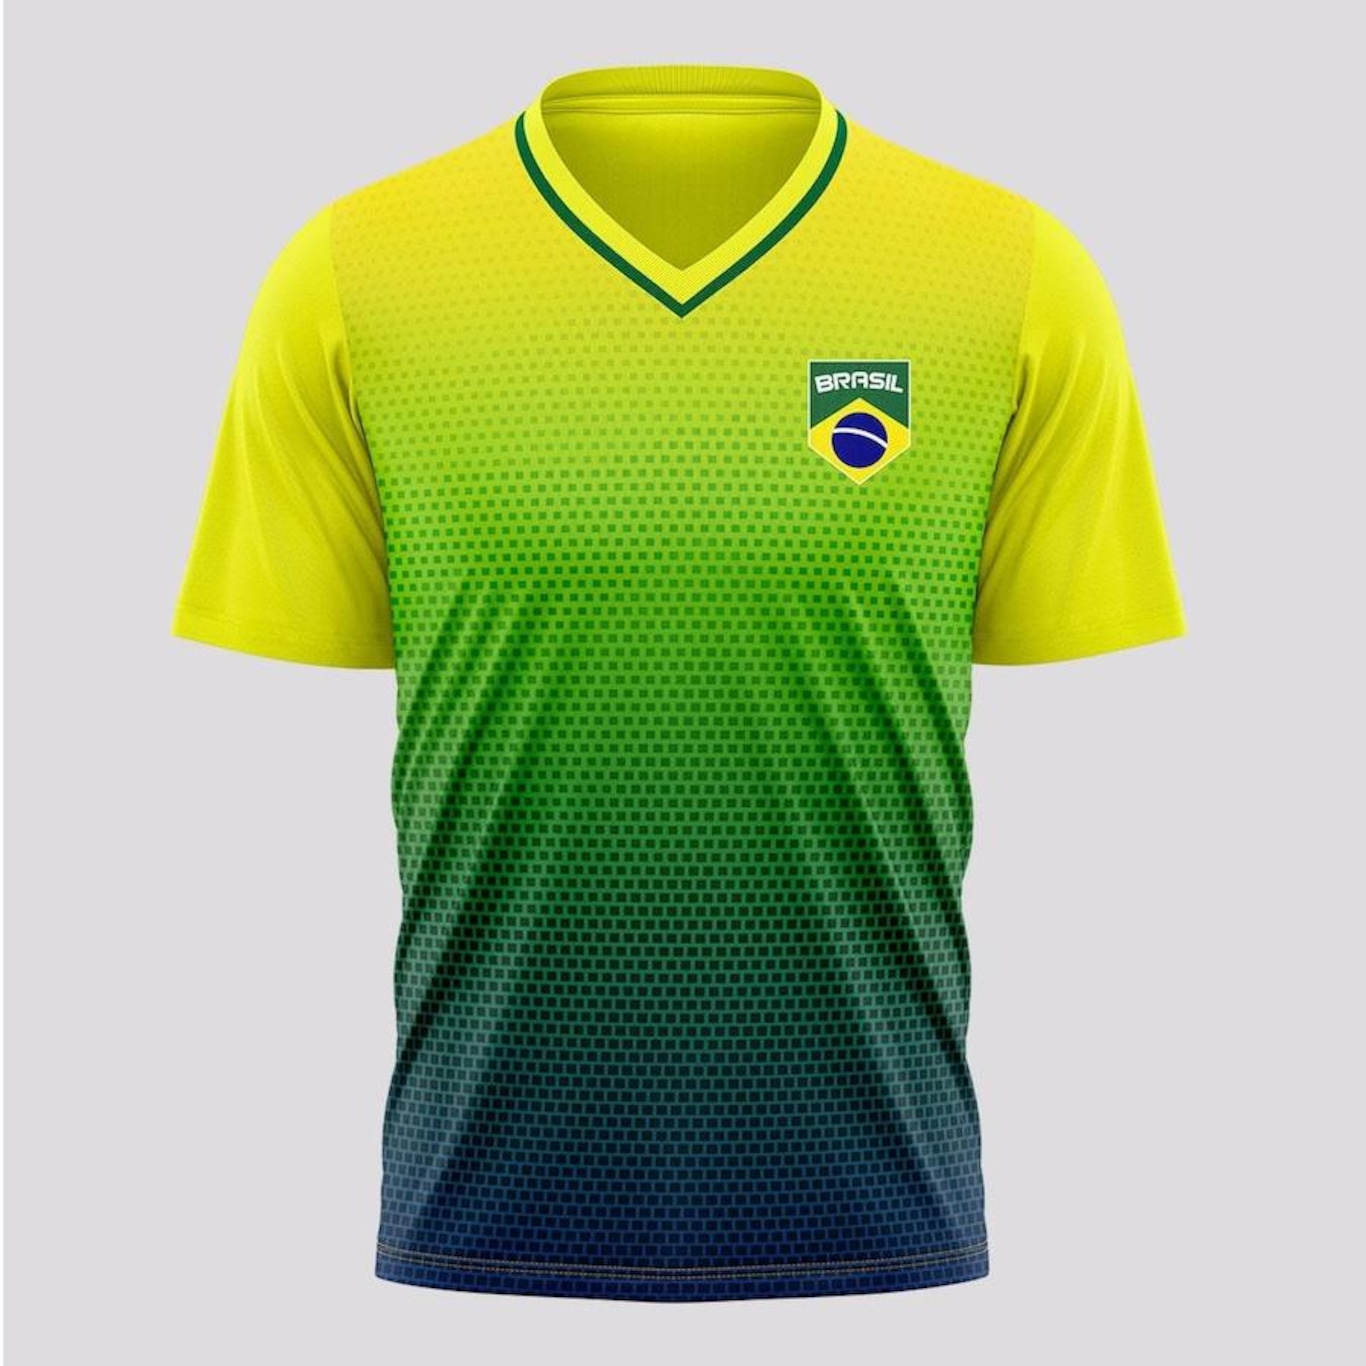 Camiseta Brasil Potiguara Preta